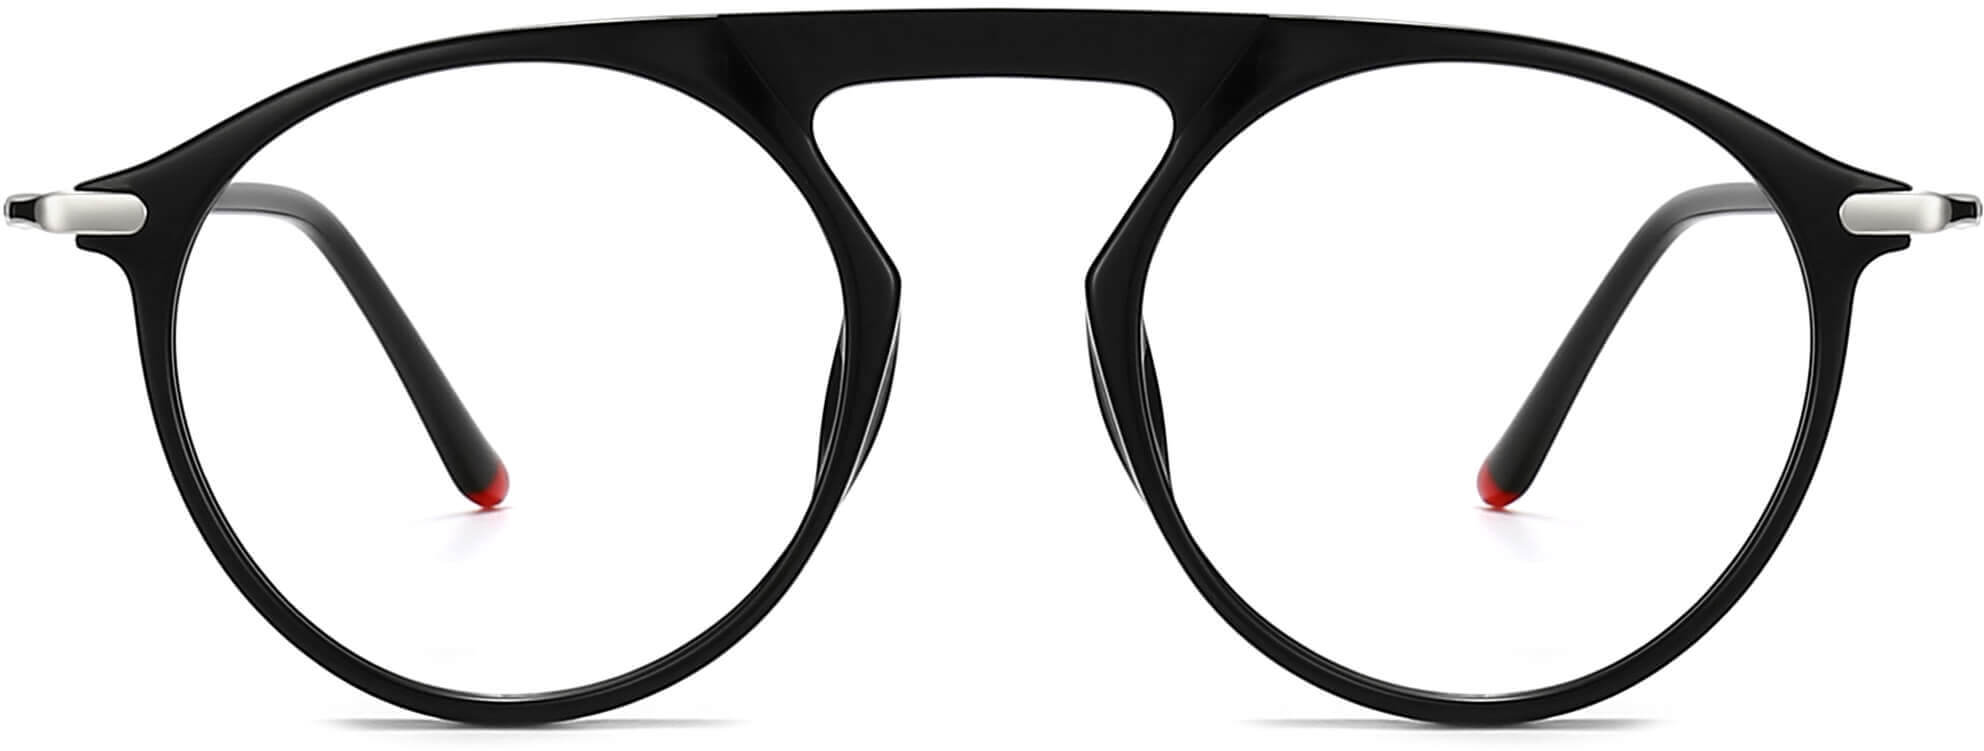 Kinley Round Black Eyeglasses from ANRRI